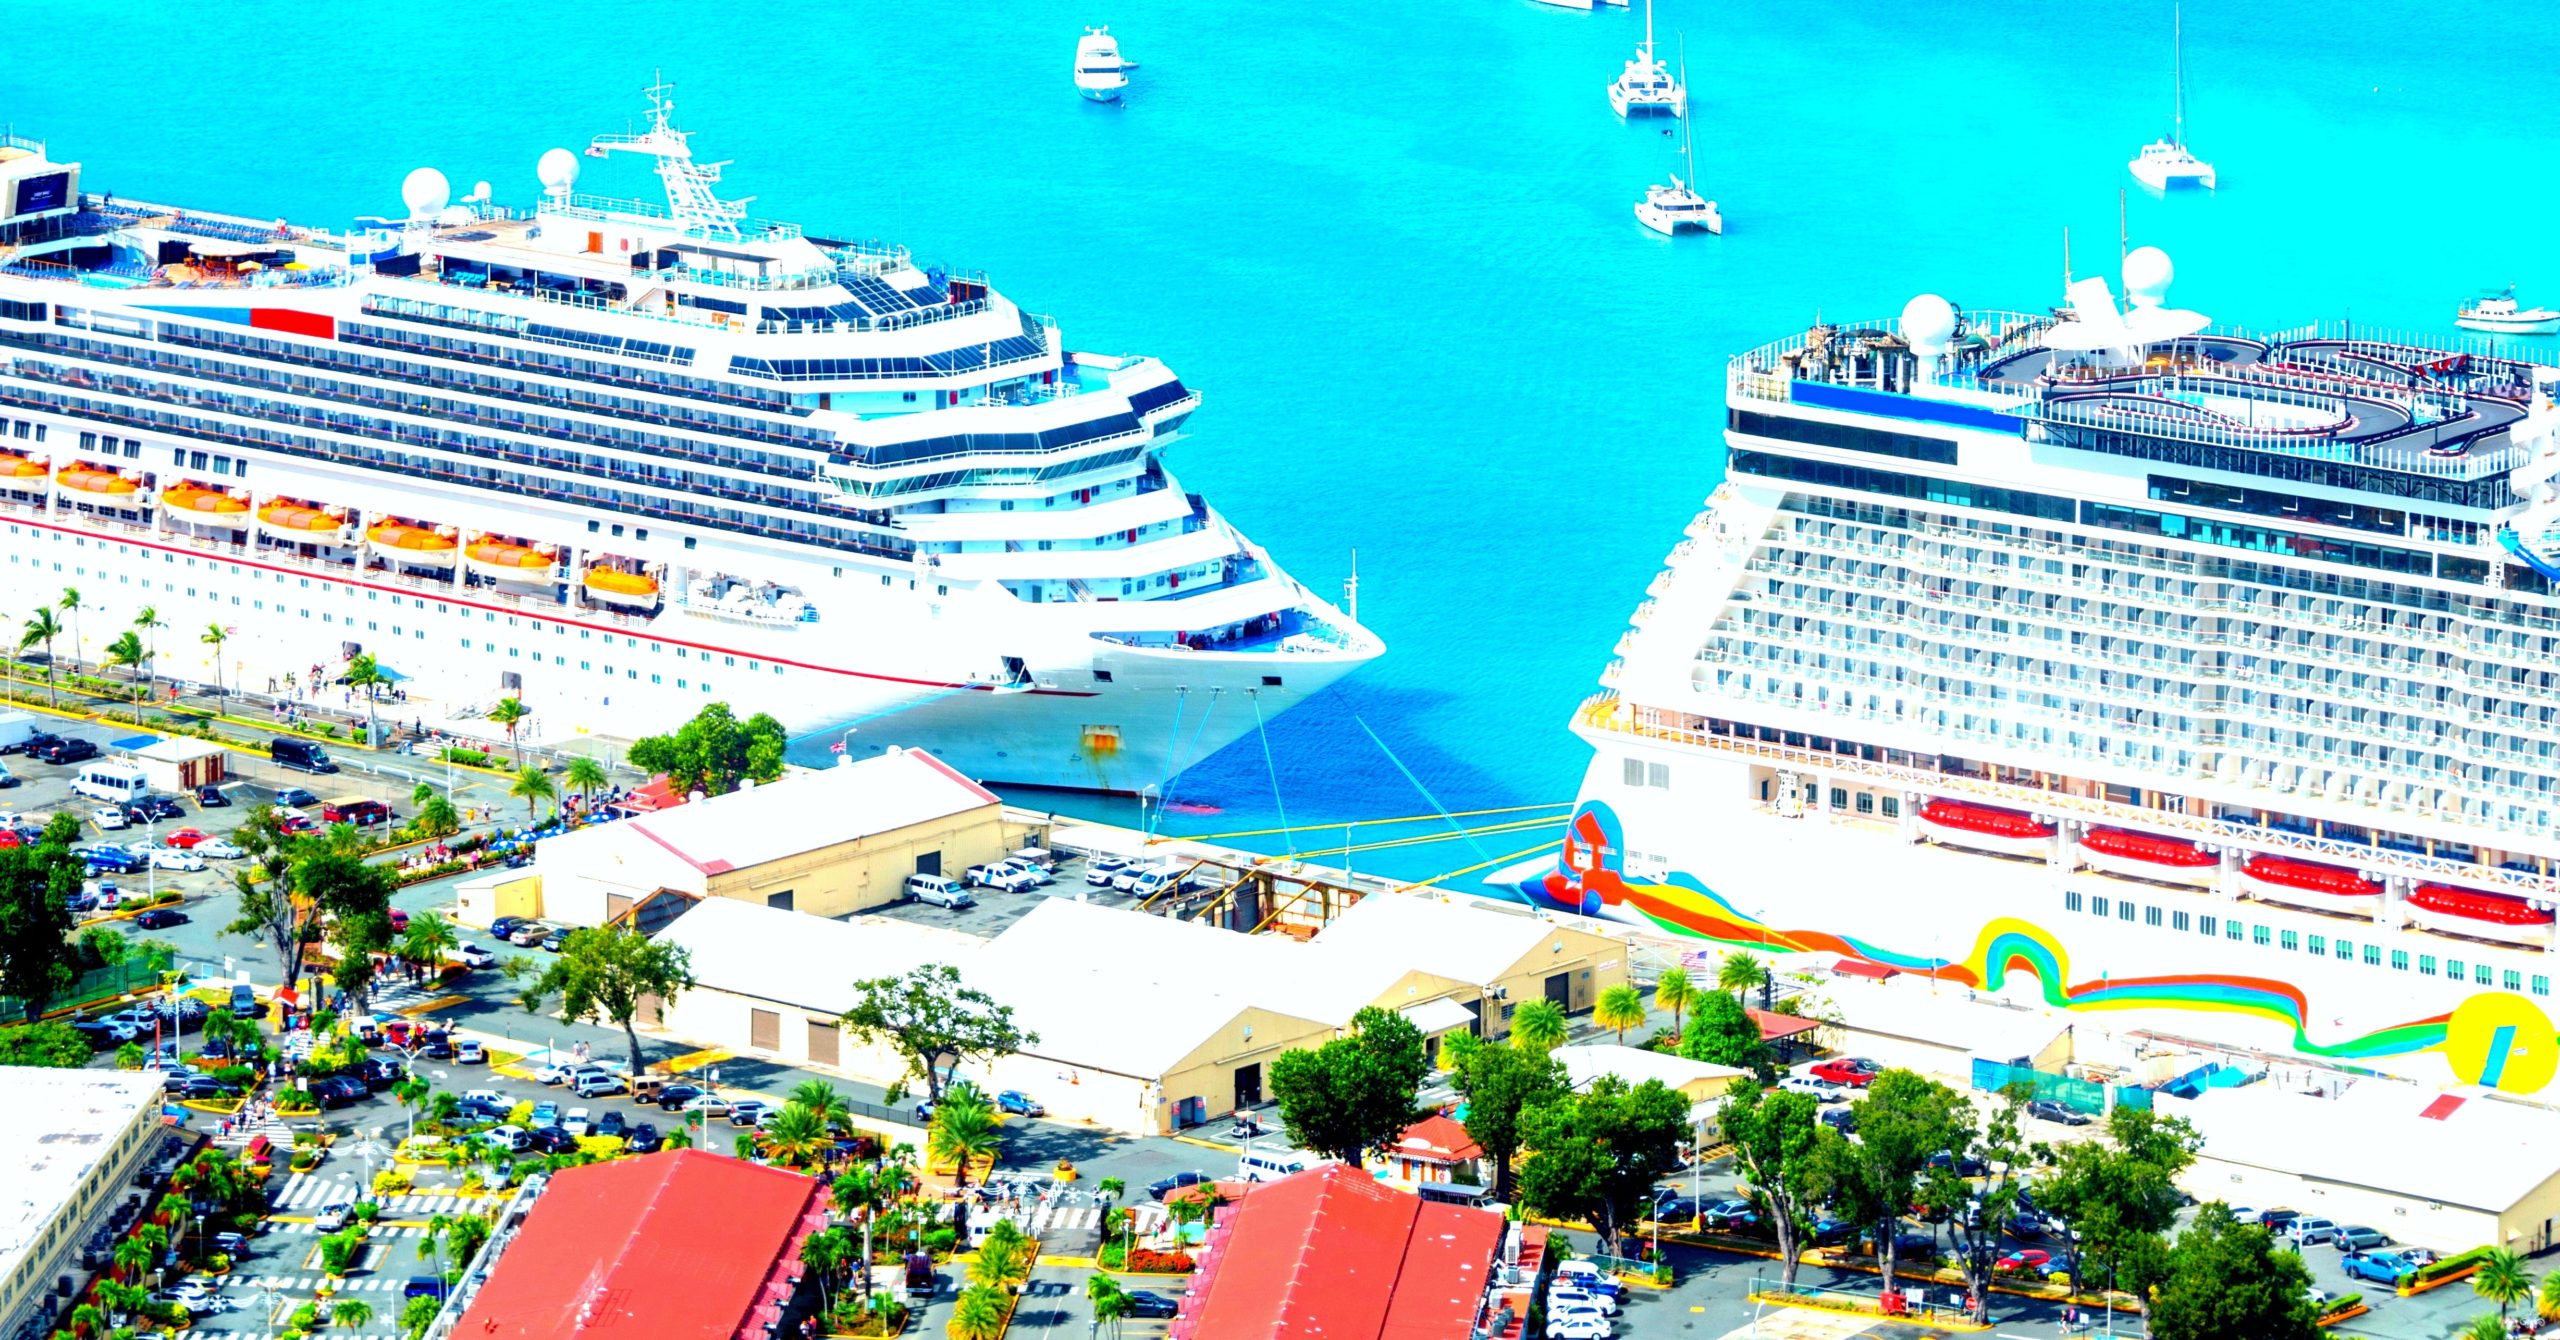 cruise ships at port docked